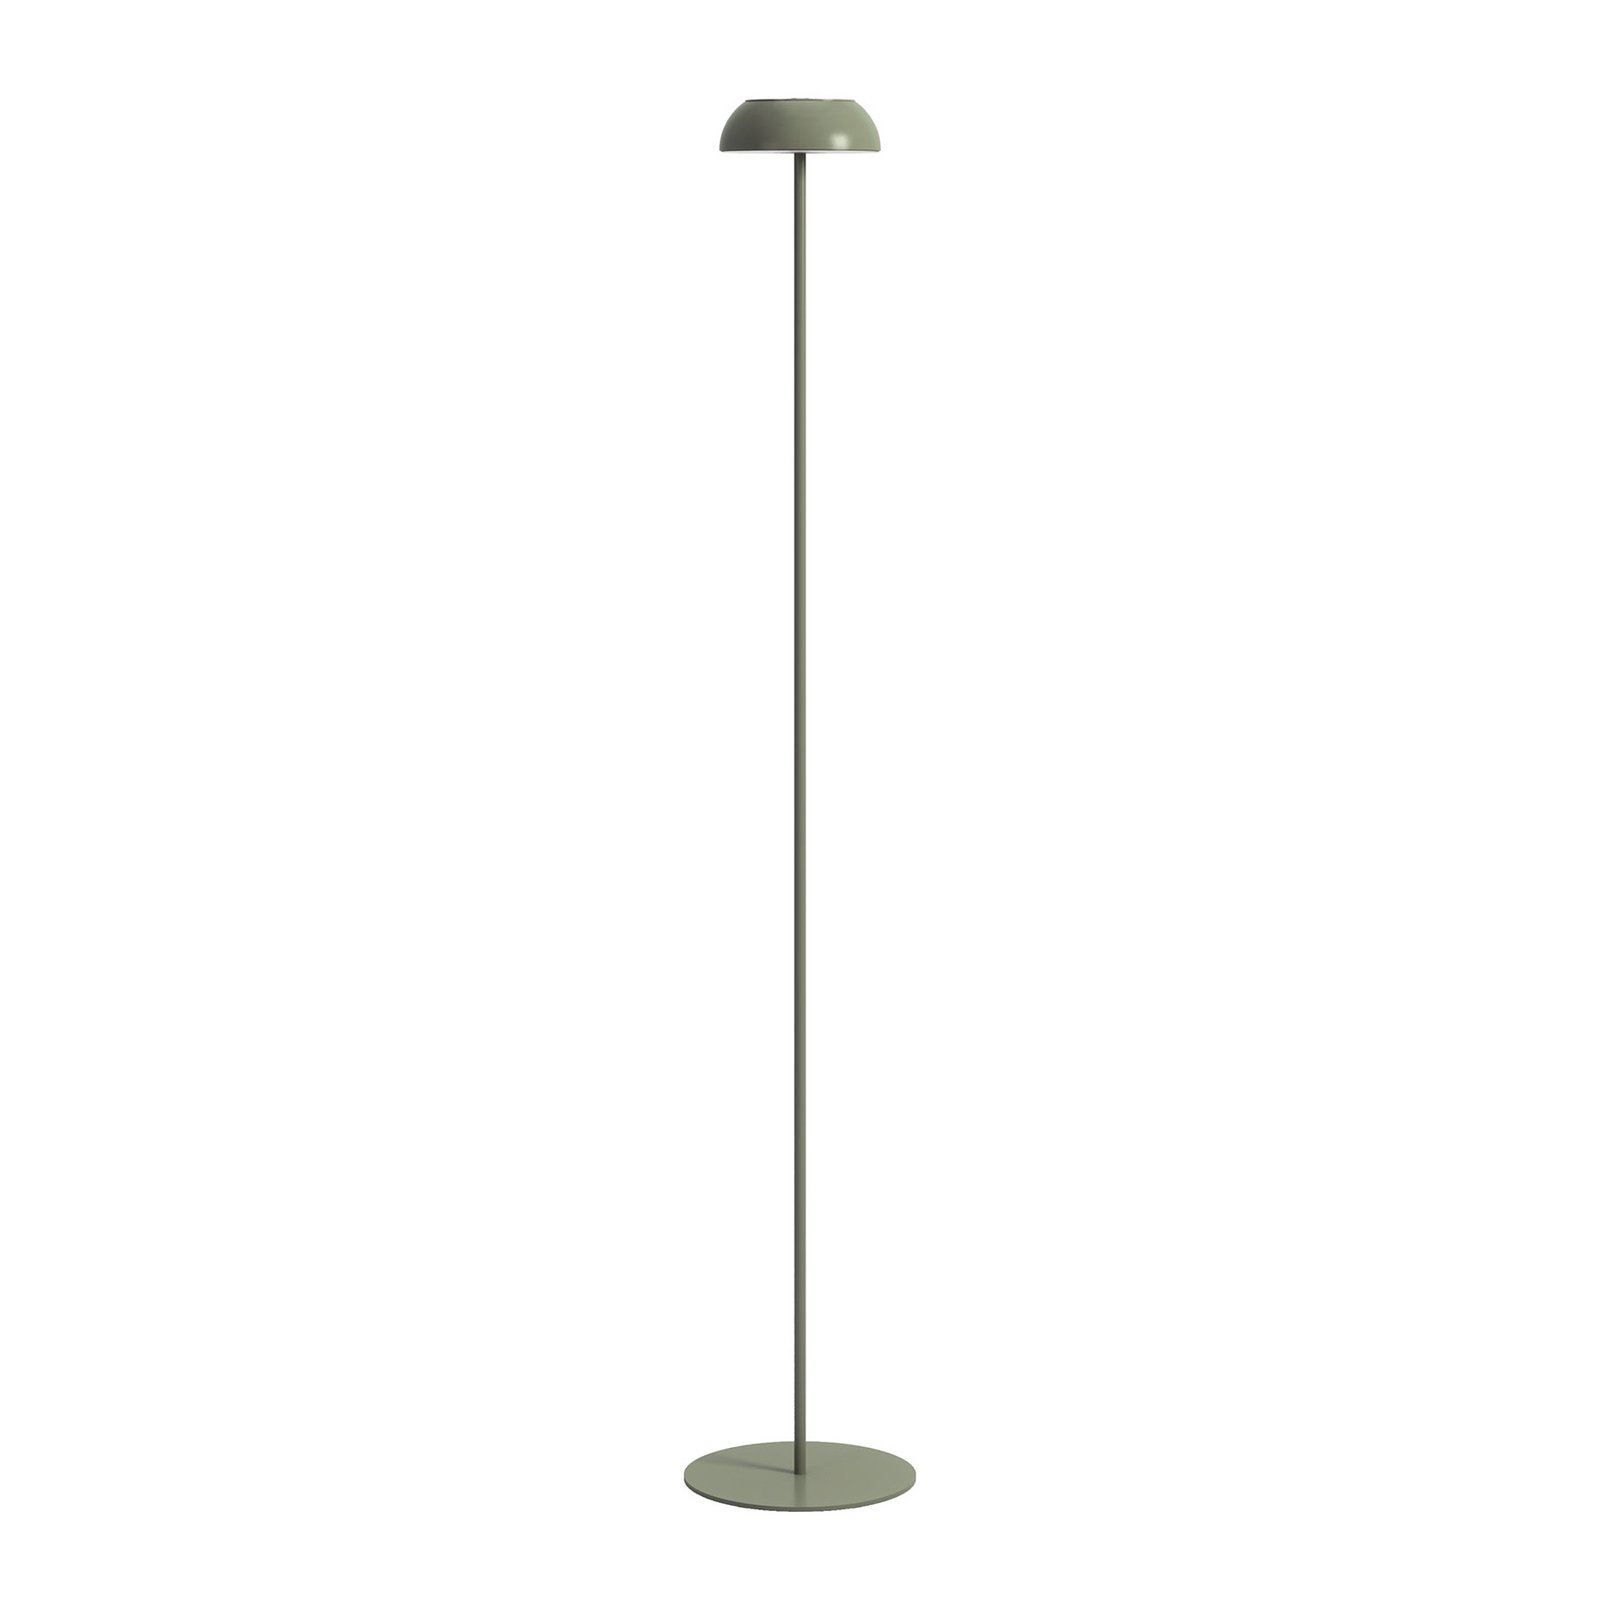 Axolight Float LED designer floor lamp, green